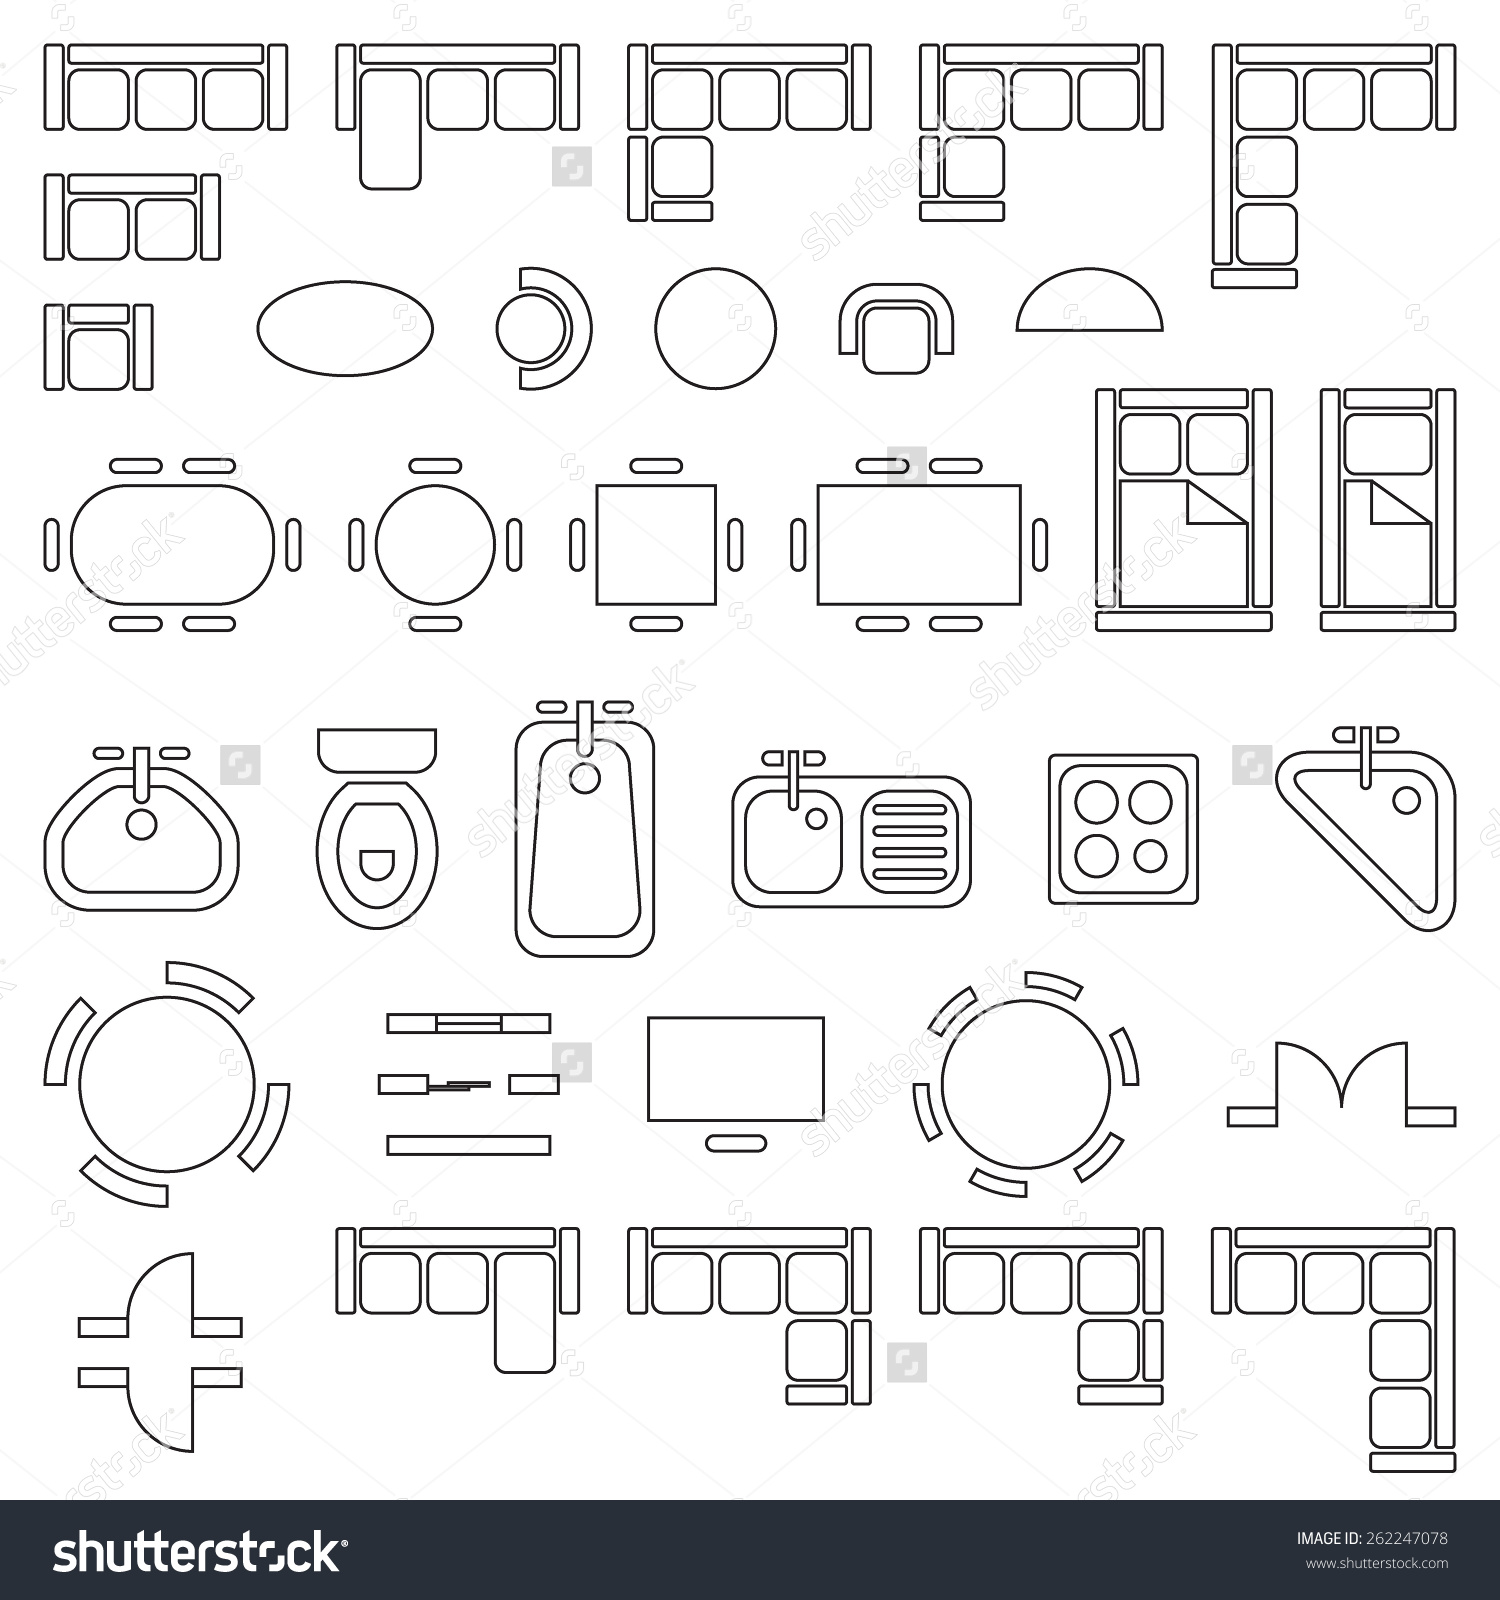 free house plan drawing symbols